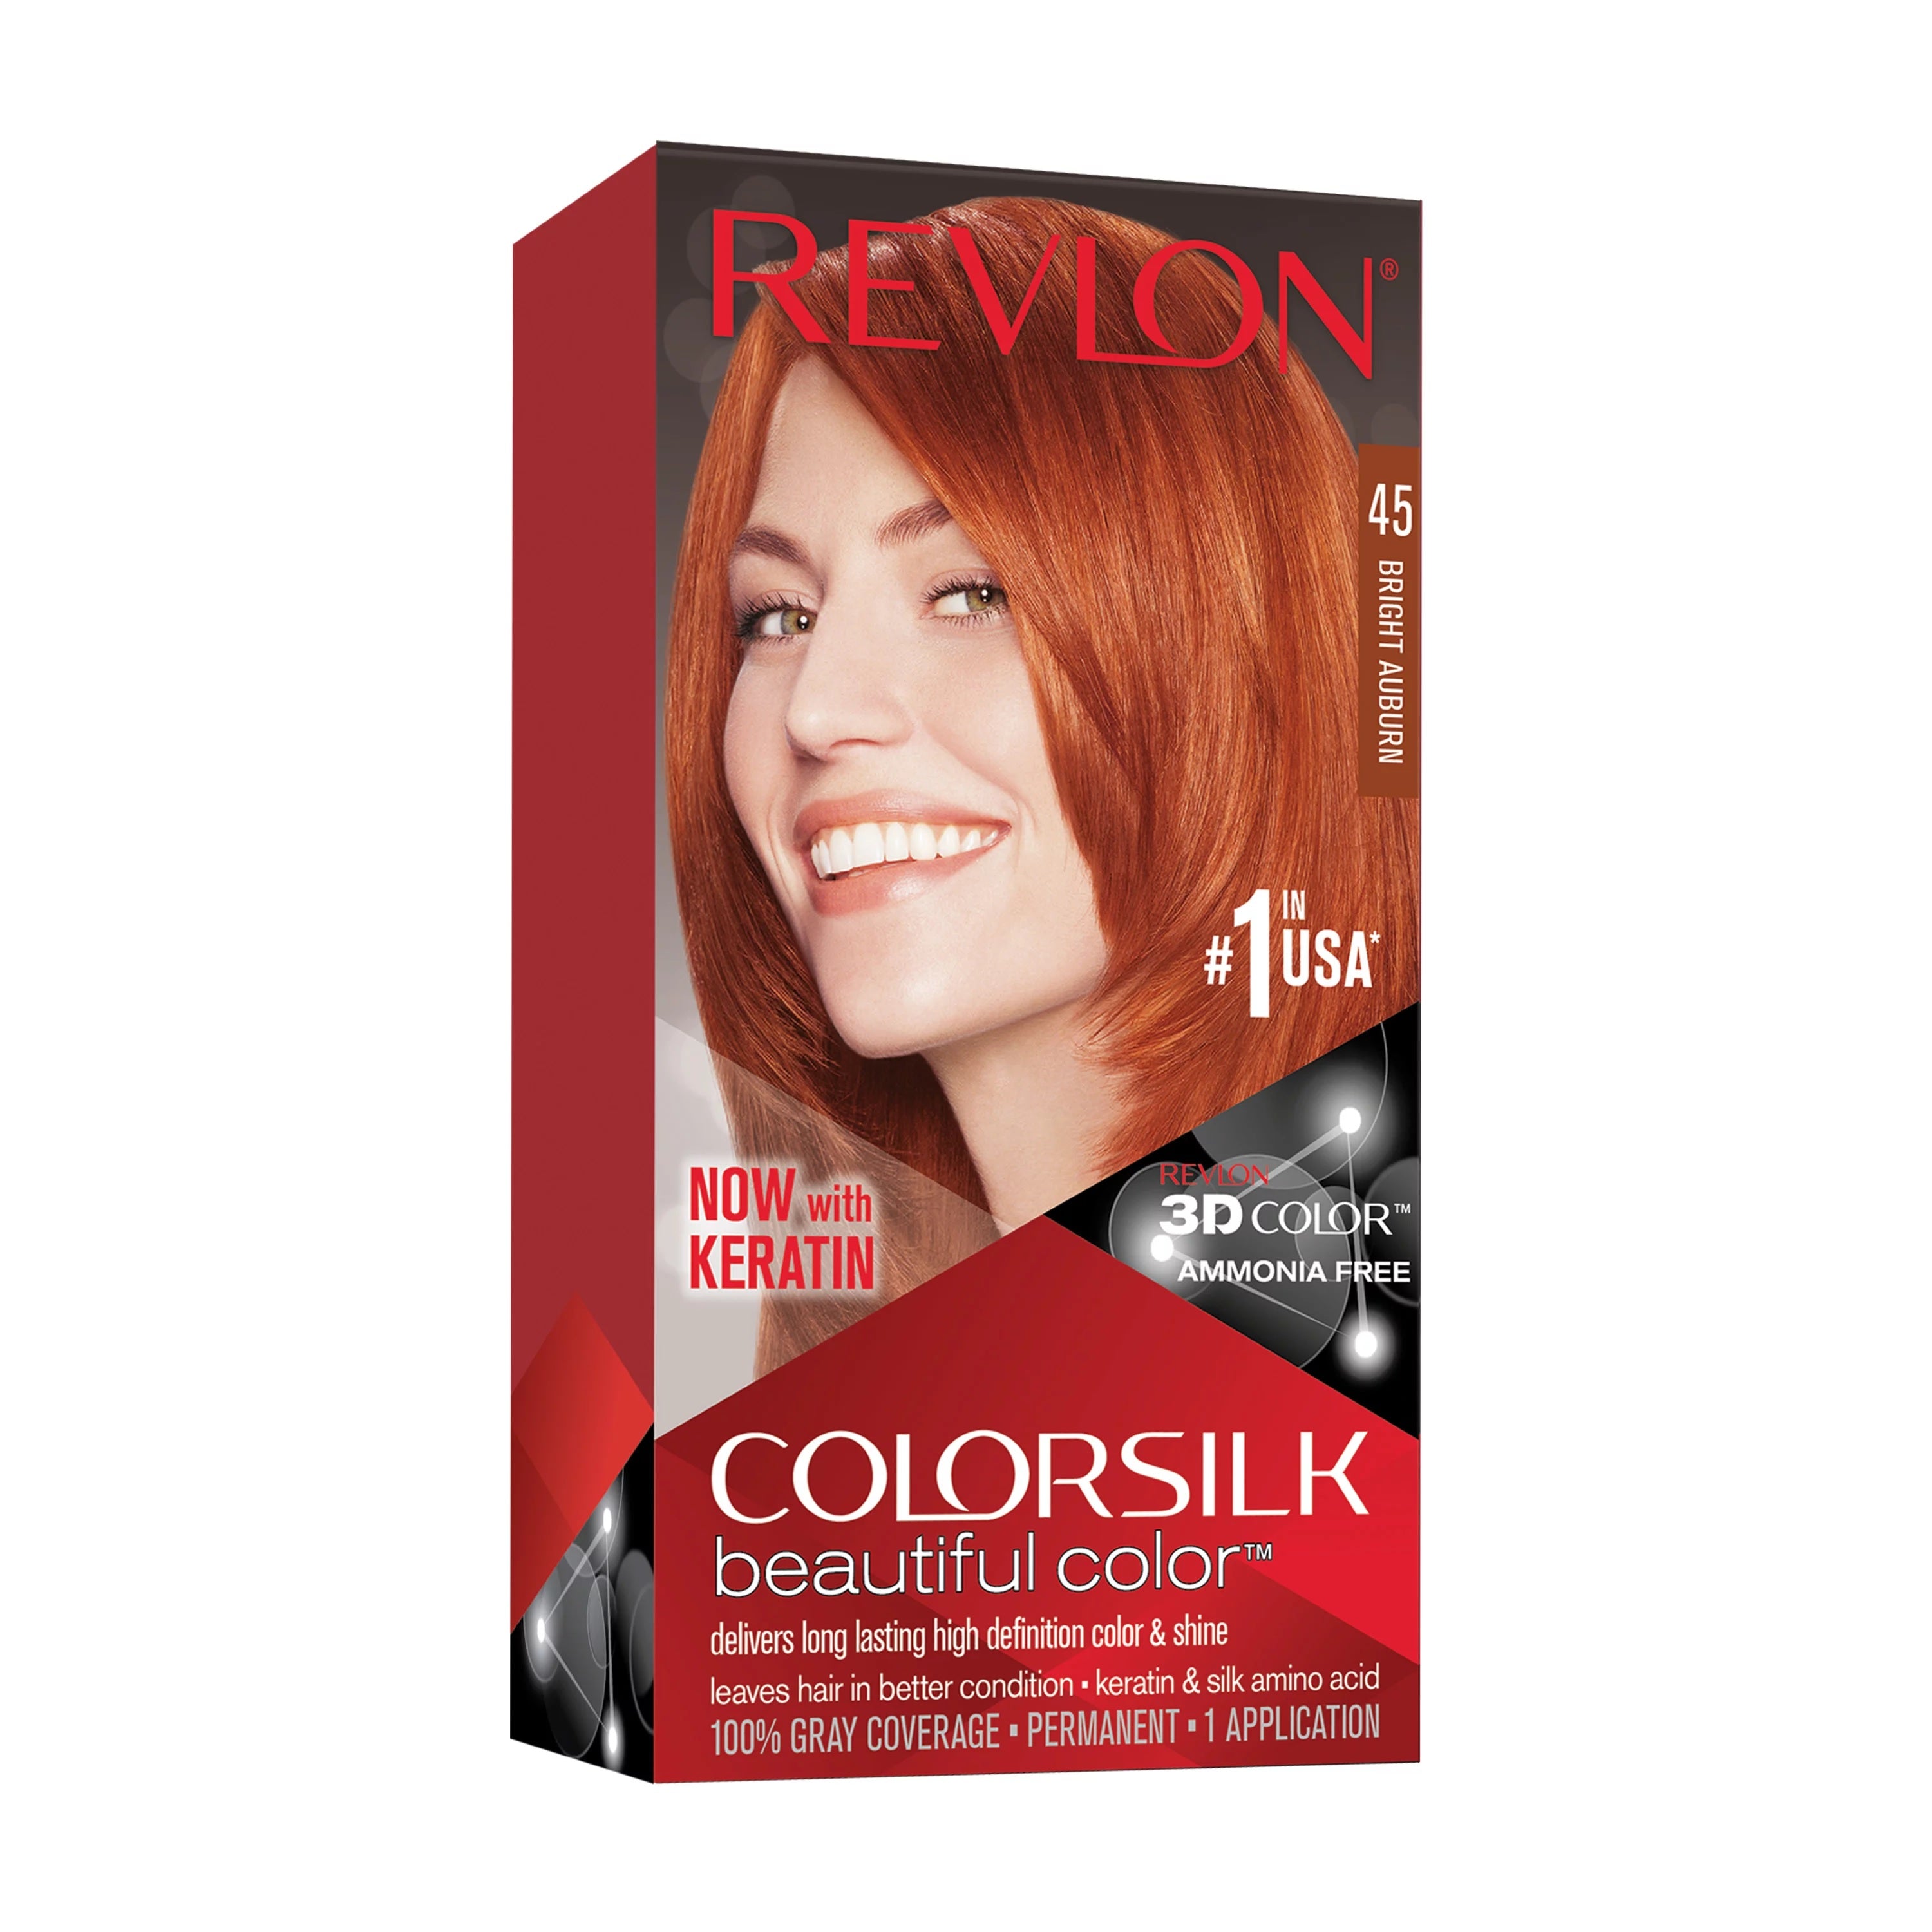 Revlon Colorsilk Hair Color 45 Bright Auburn USA - 1ct/3PK